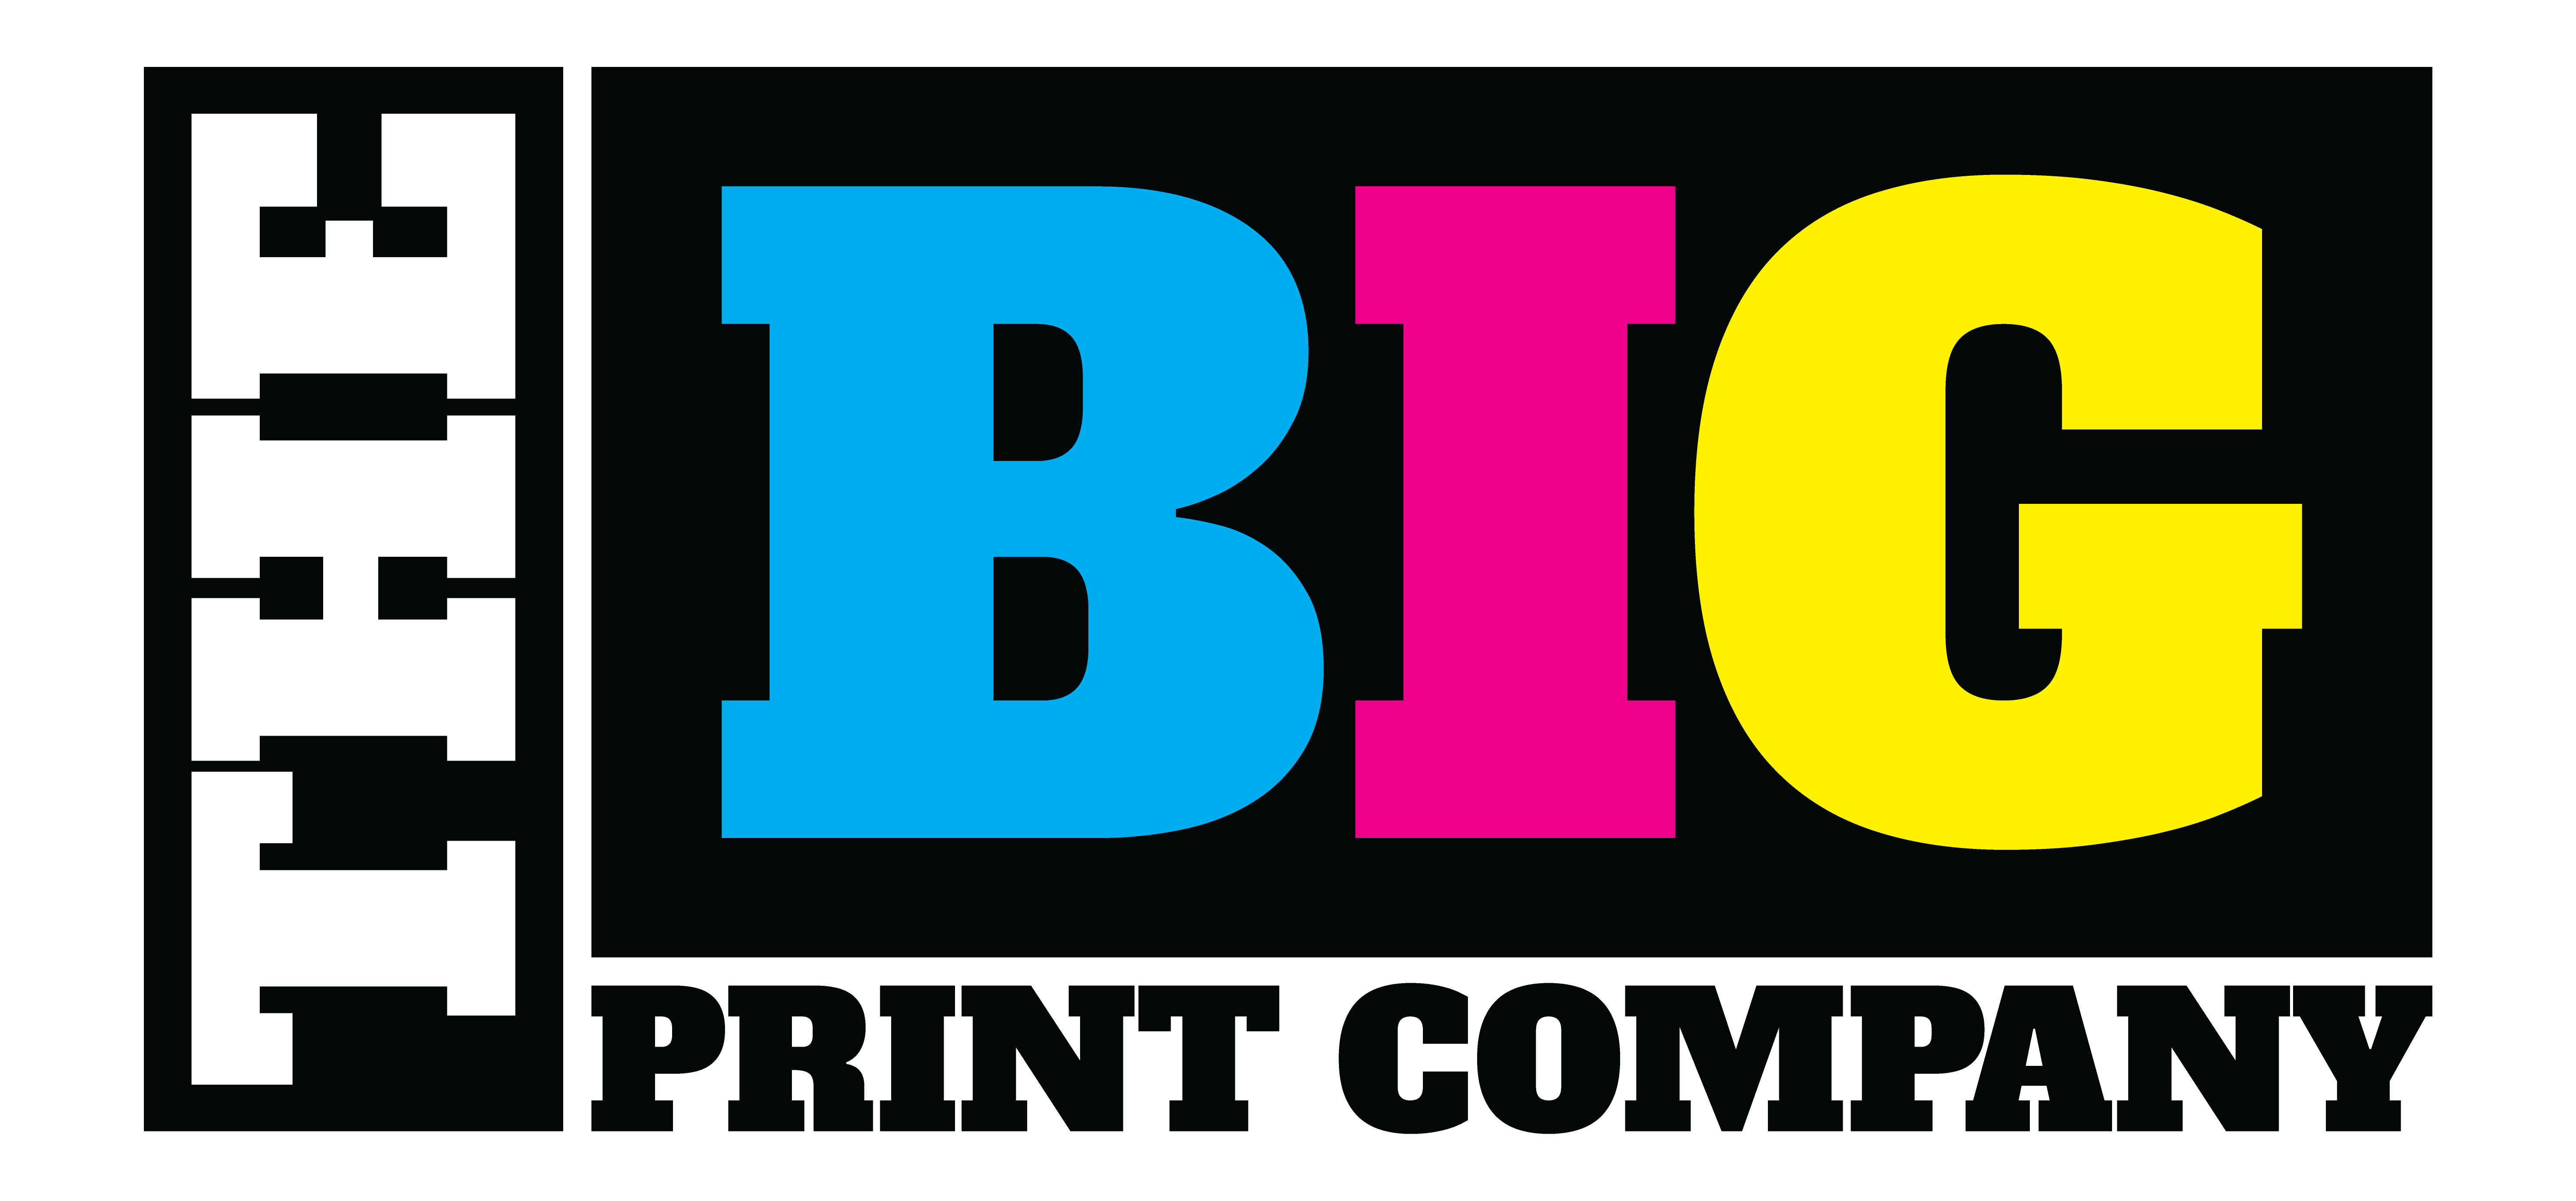 The Big Printing Company logo